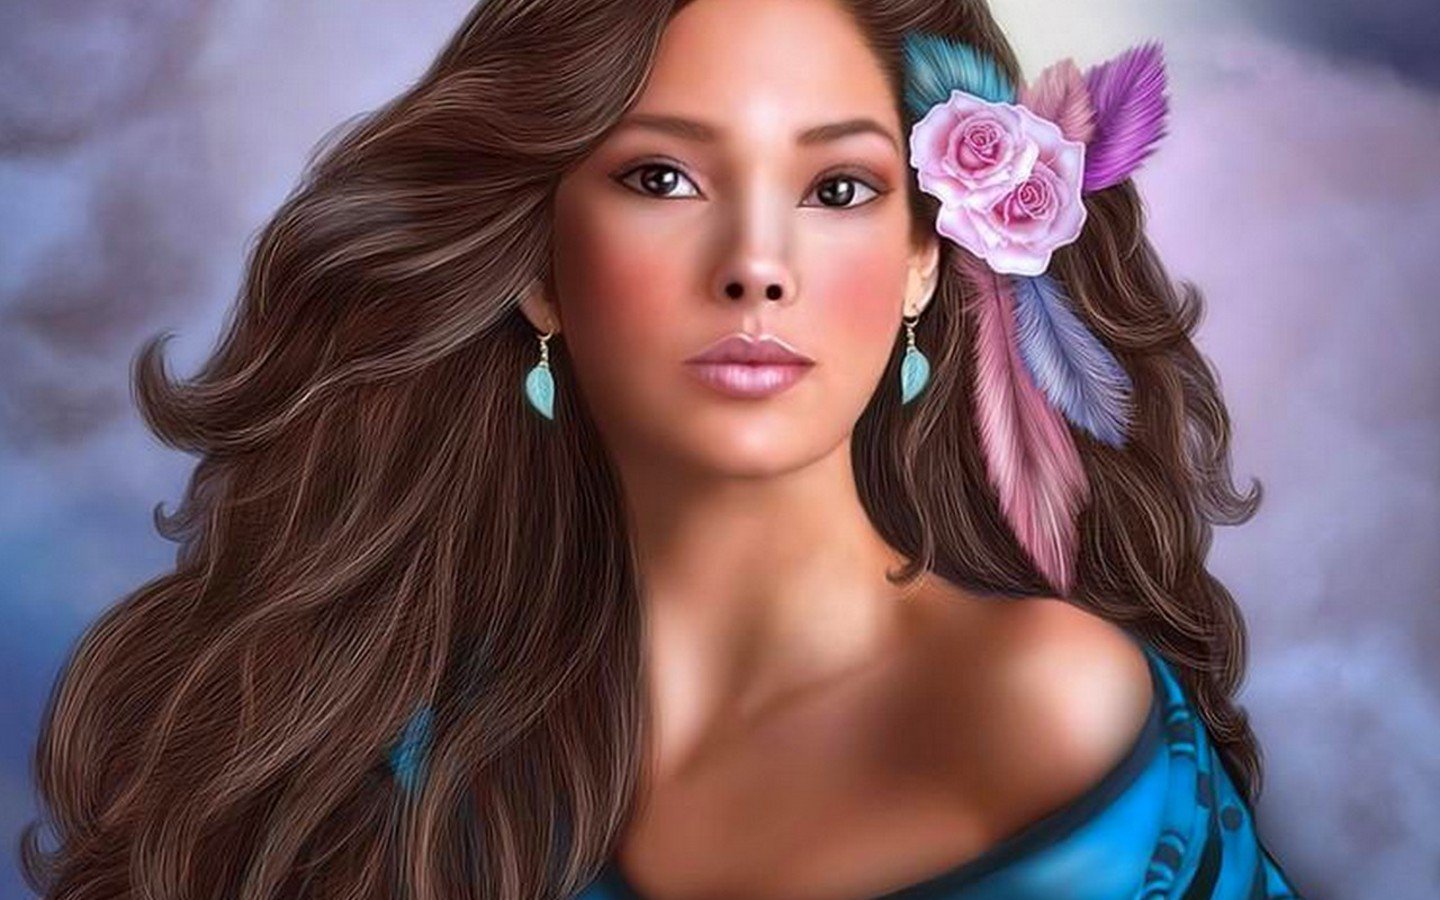 Beautiful Fantasy Girls HQ wallpapers 1440x900 free Download PIXHOME